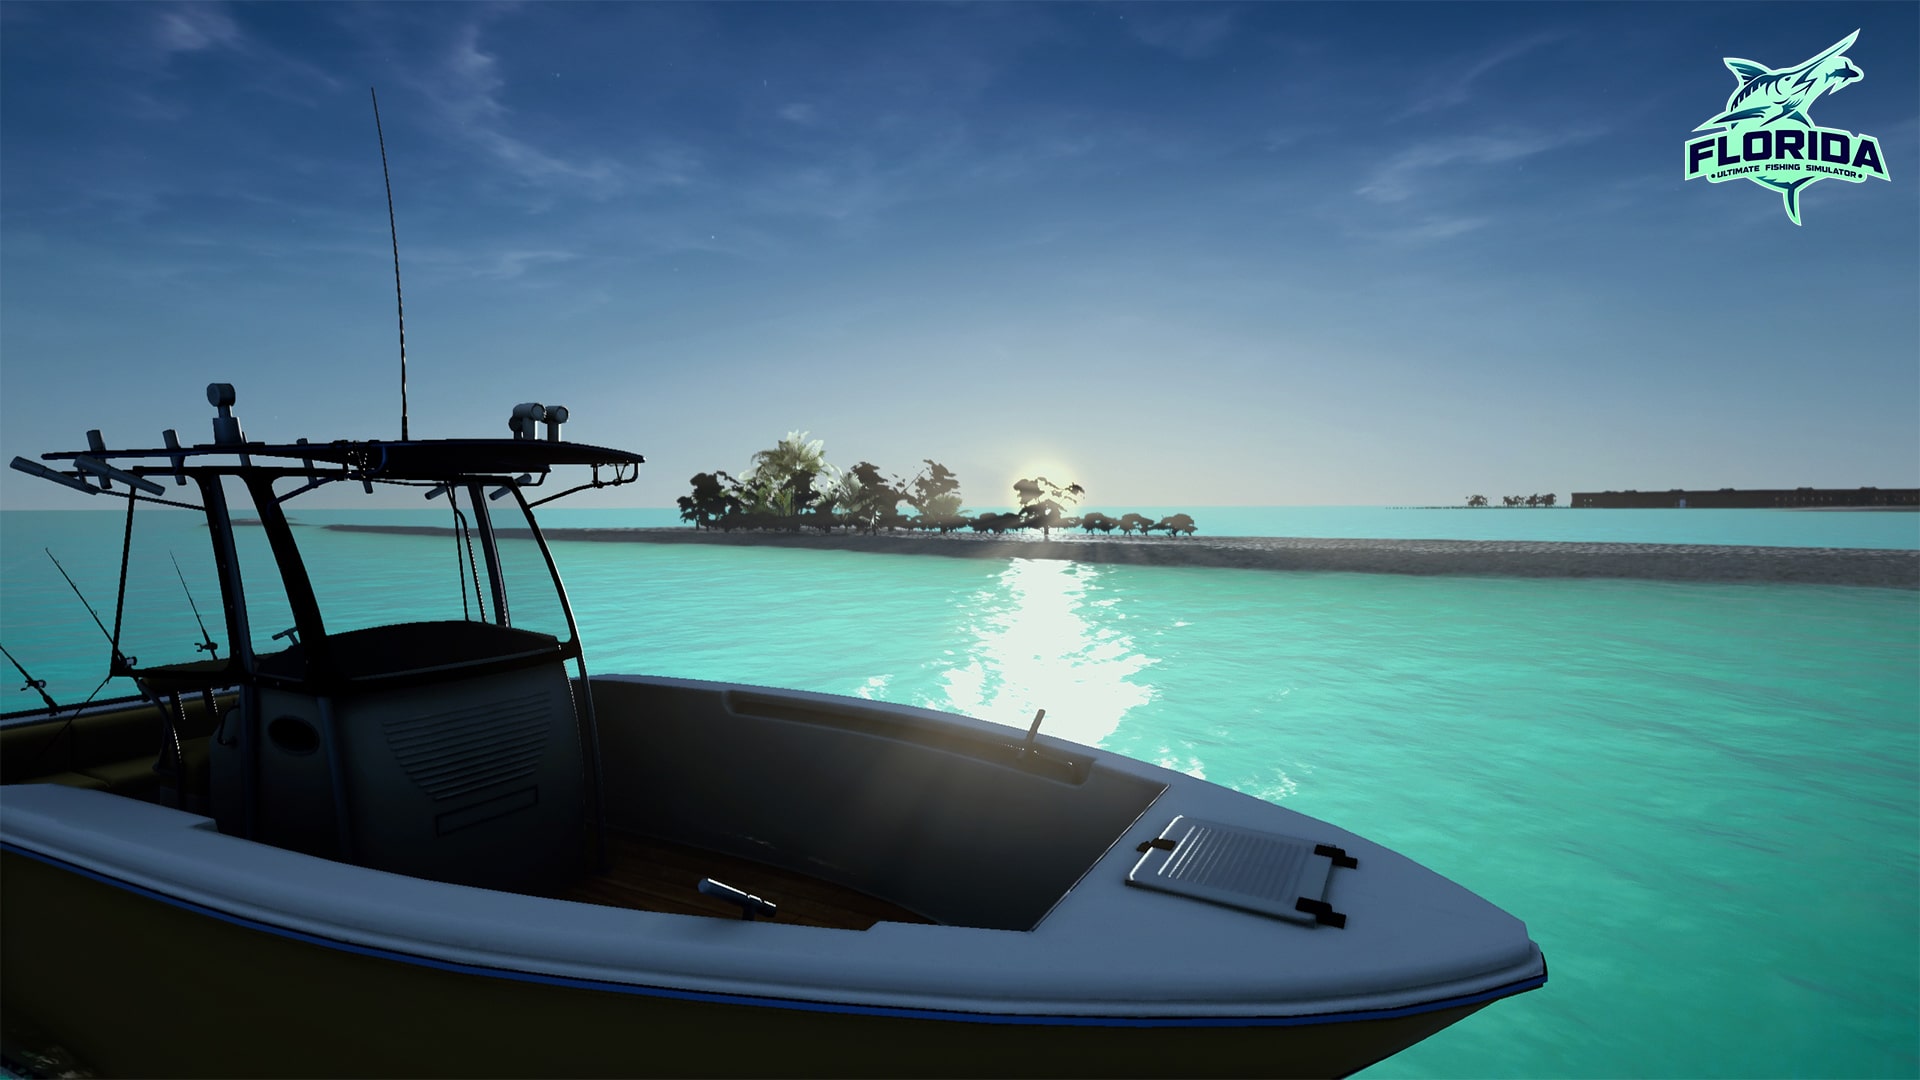 Ultimate Fishing Simulator - DEMO Version - Boats and Deep Sea Fishing! 